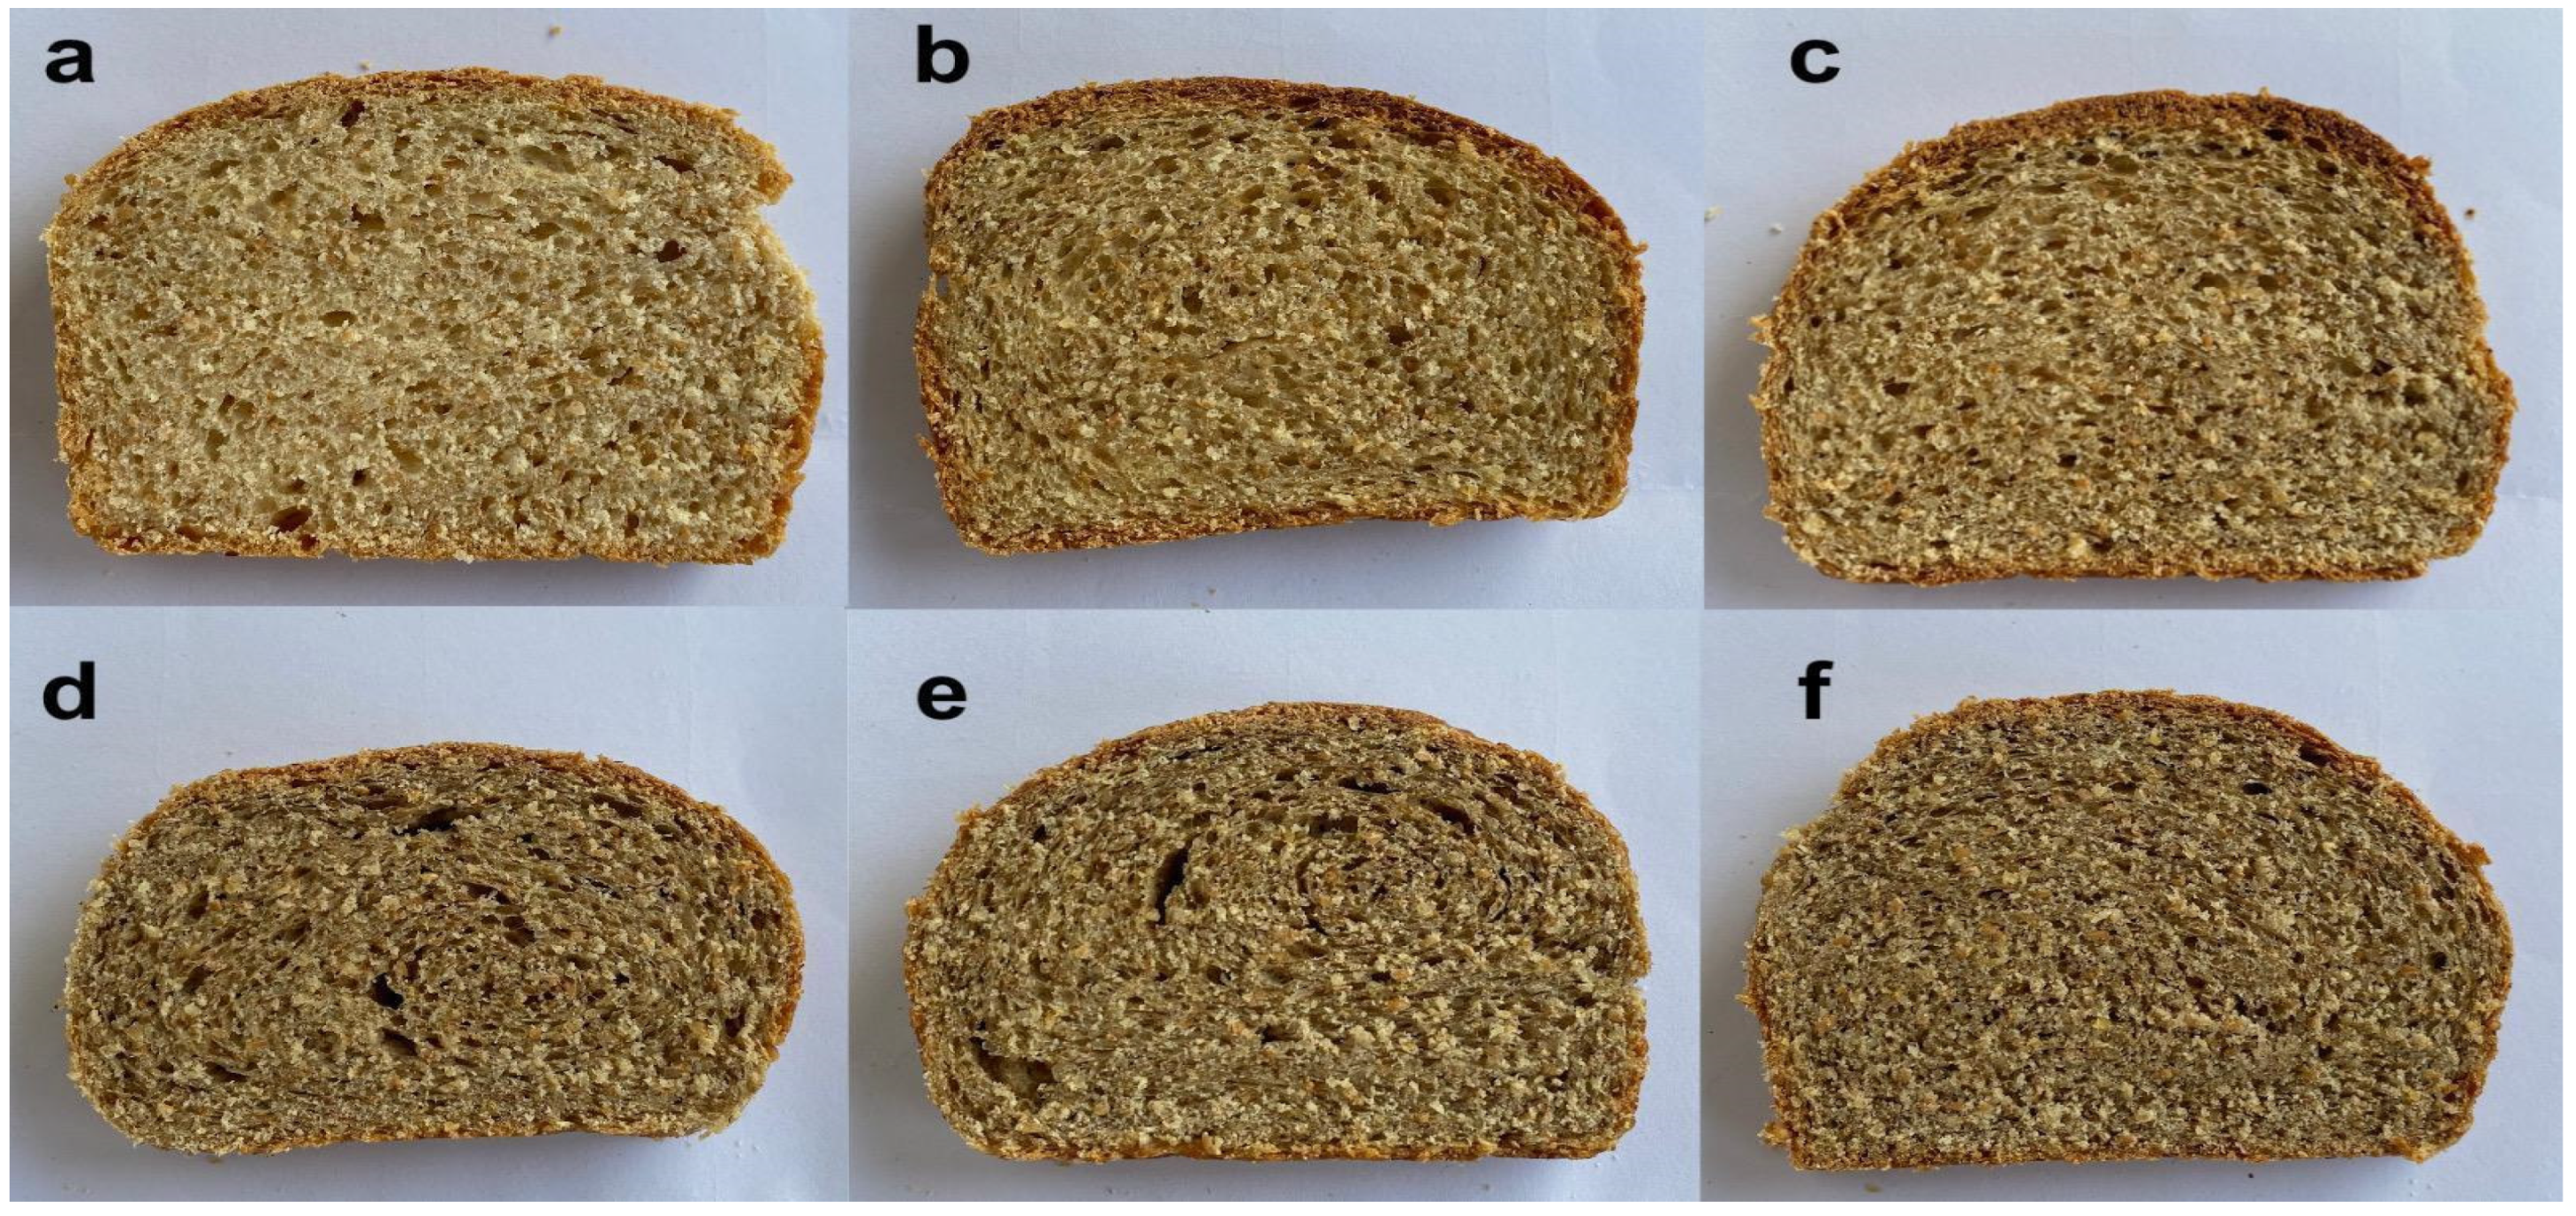 spore formation in bread mould